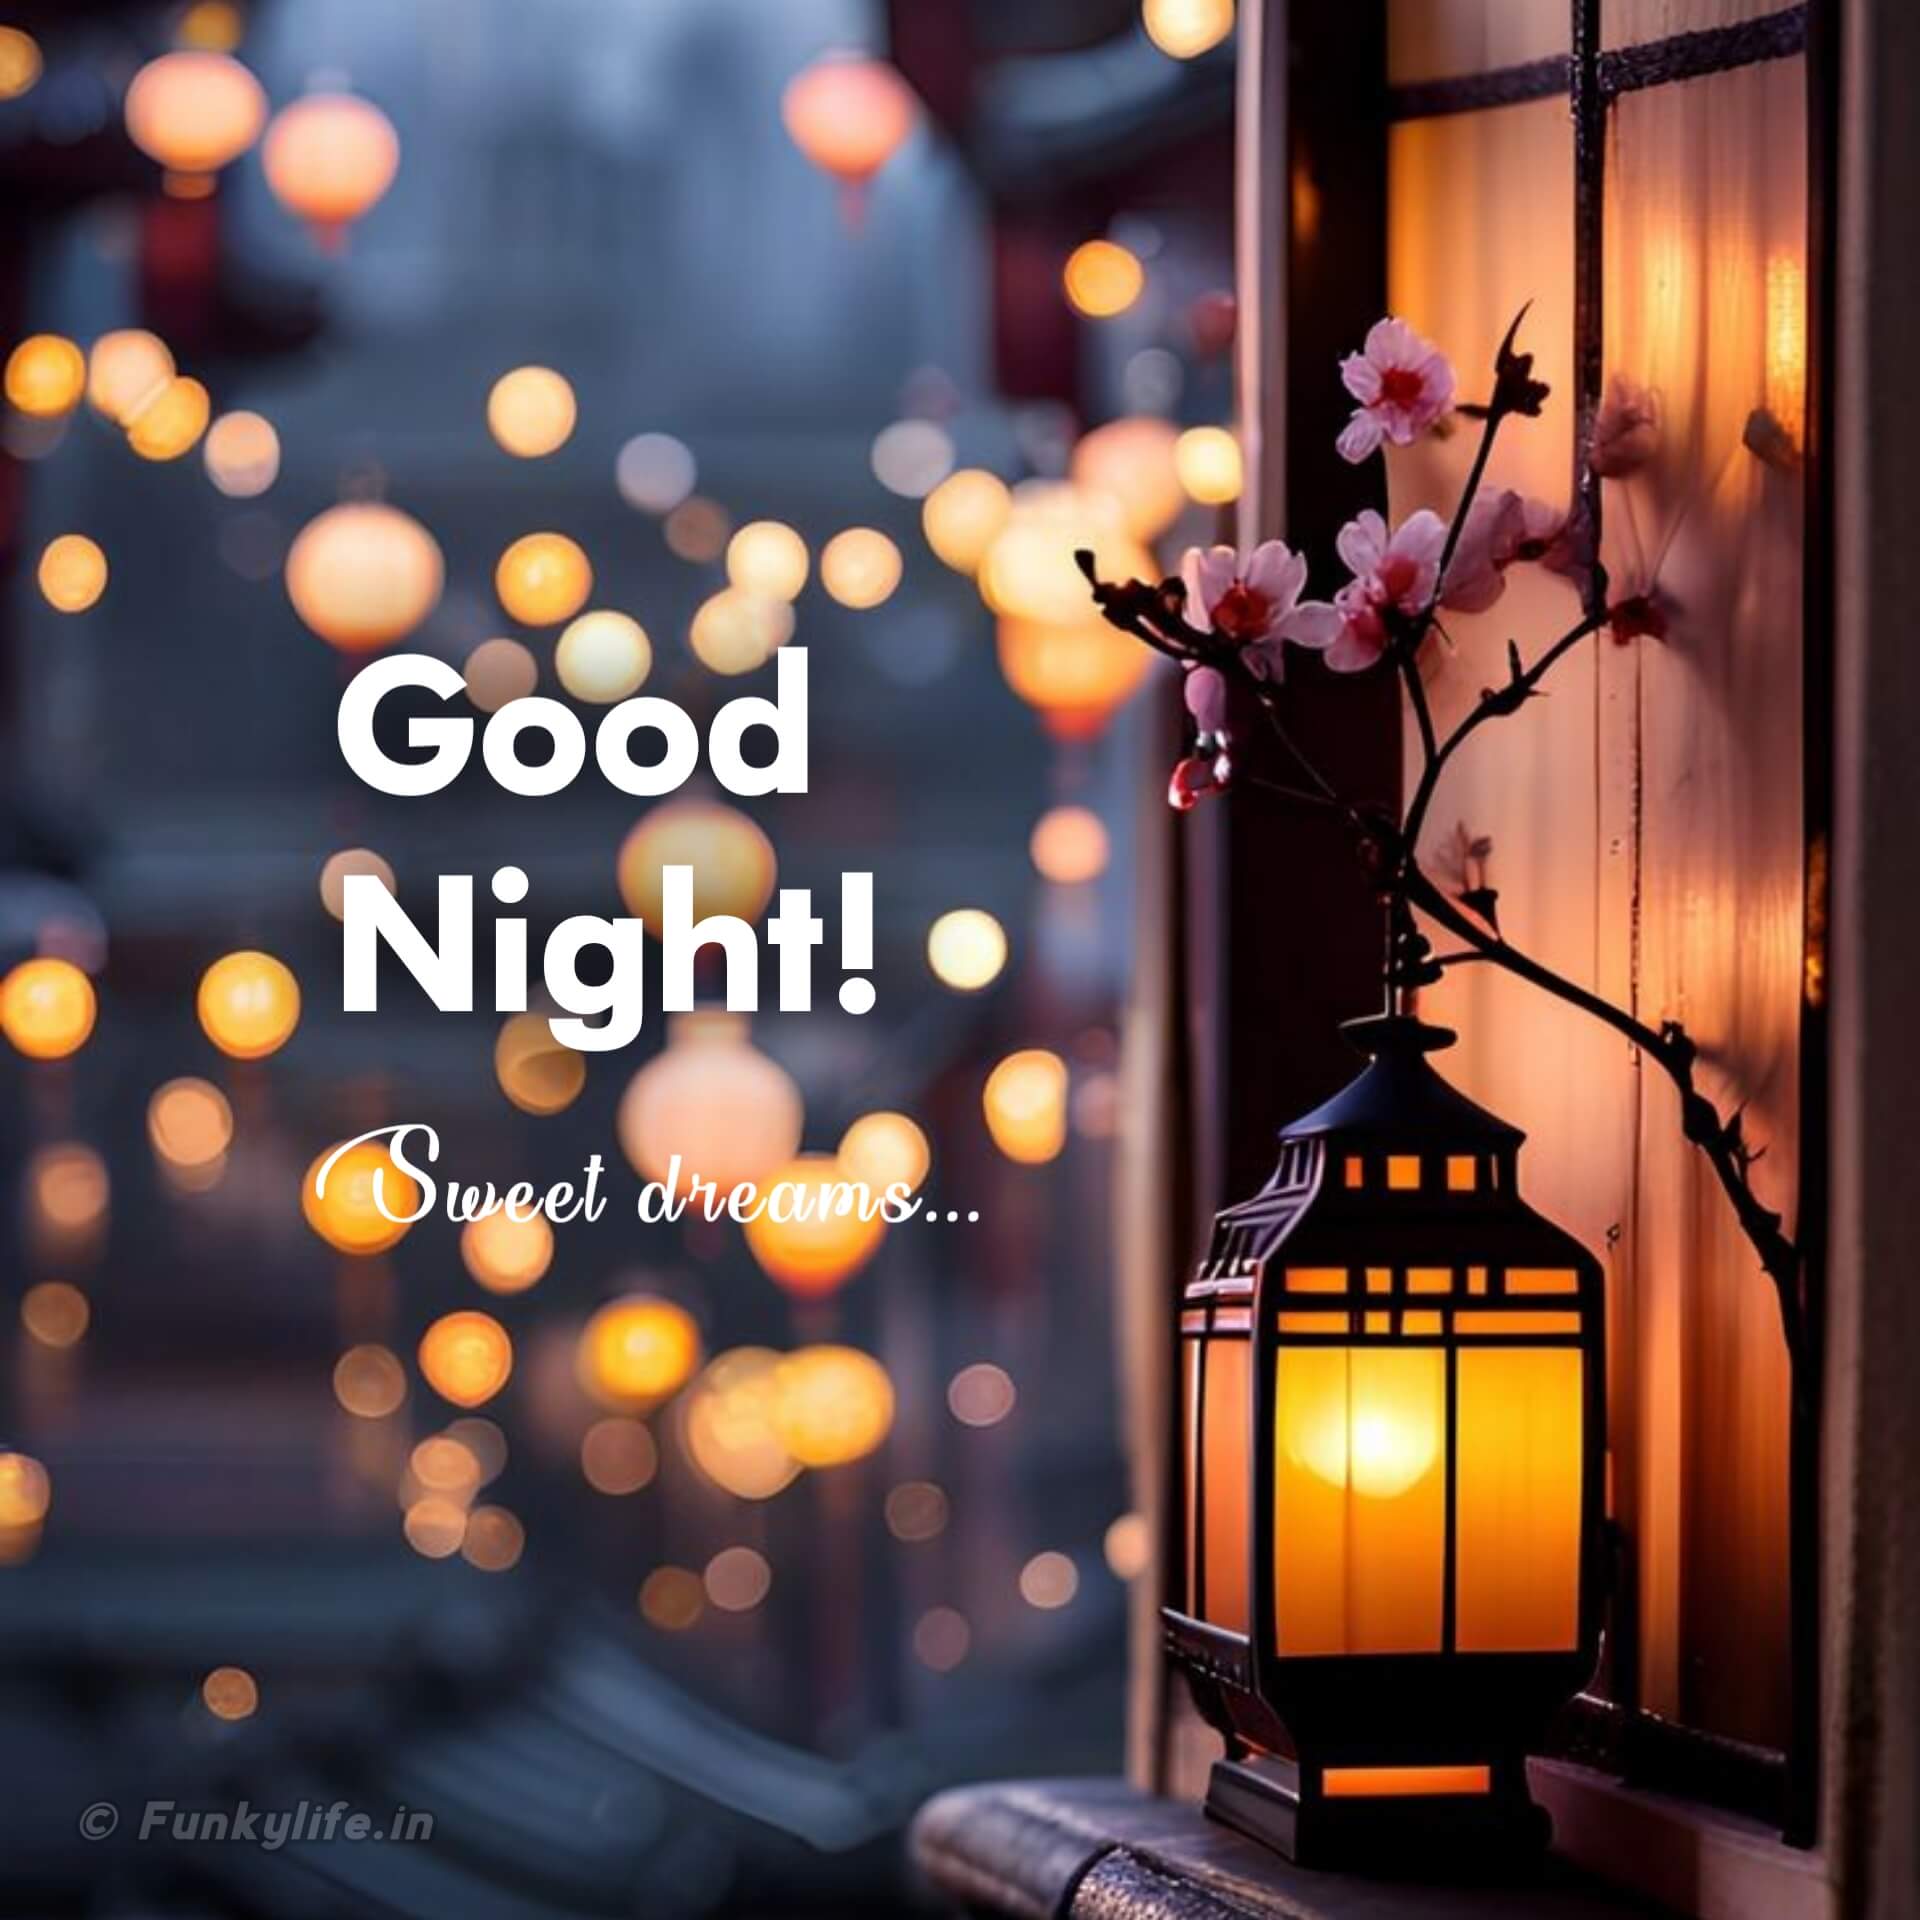 Good Night Lamp Image